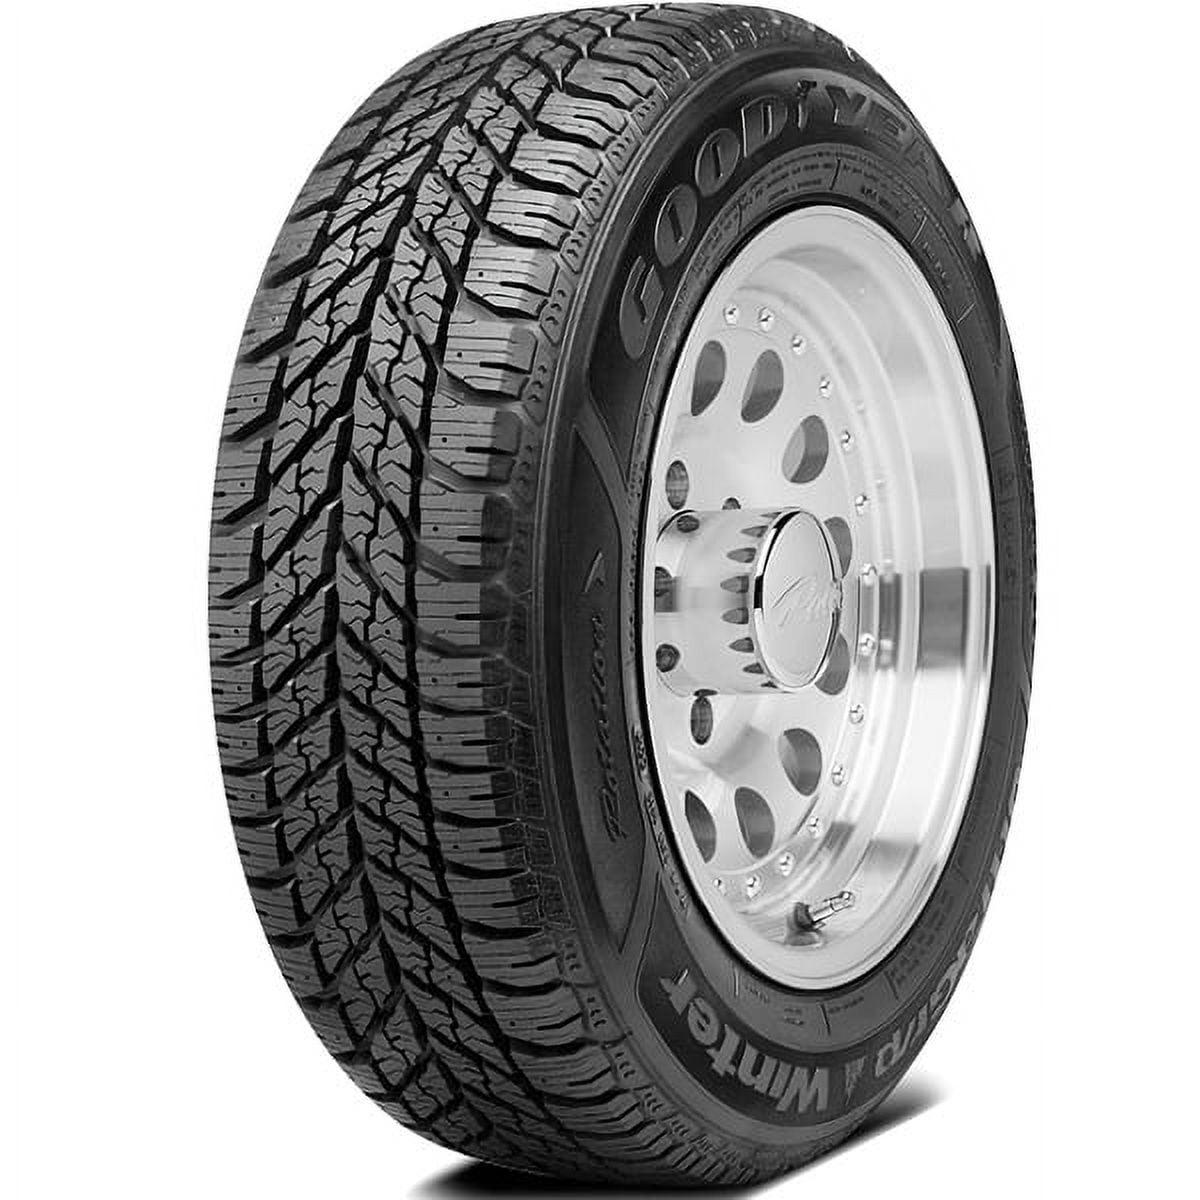 Goodyear Ultra Grip Winter Winter 225/50R17 94T Passenger Tire Fits:  2012-15 Chevrolet Cruze LT, 2016 Chevrolet Cruze Limited LT | Autoreifen